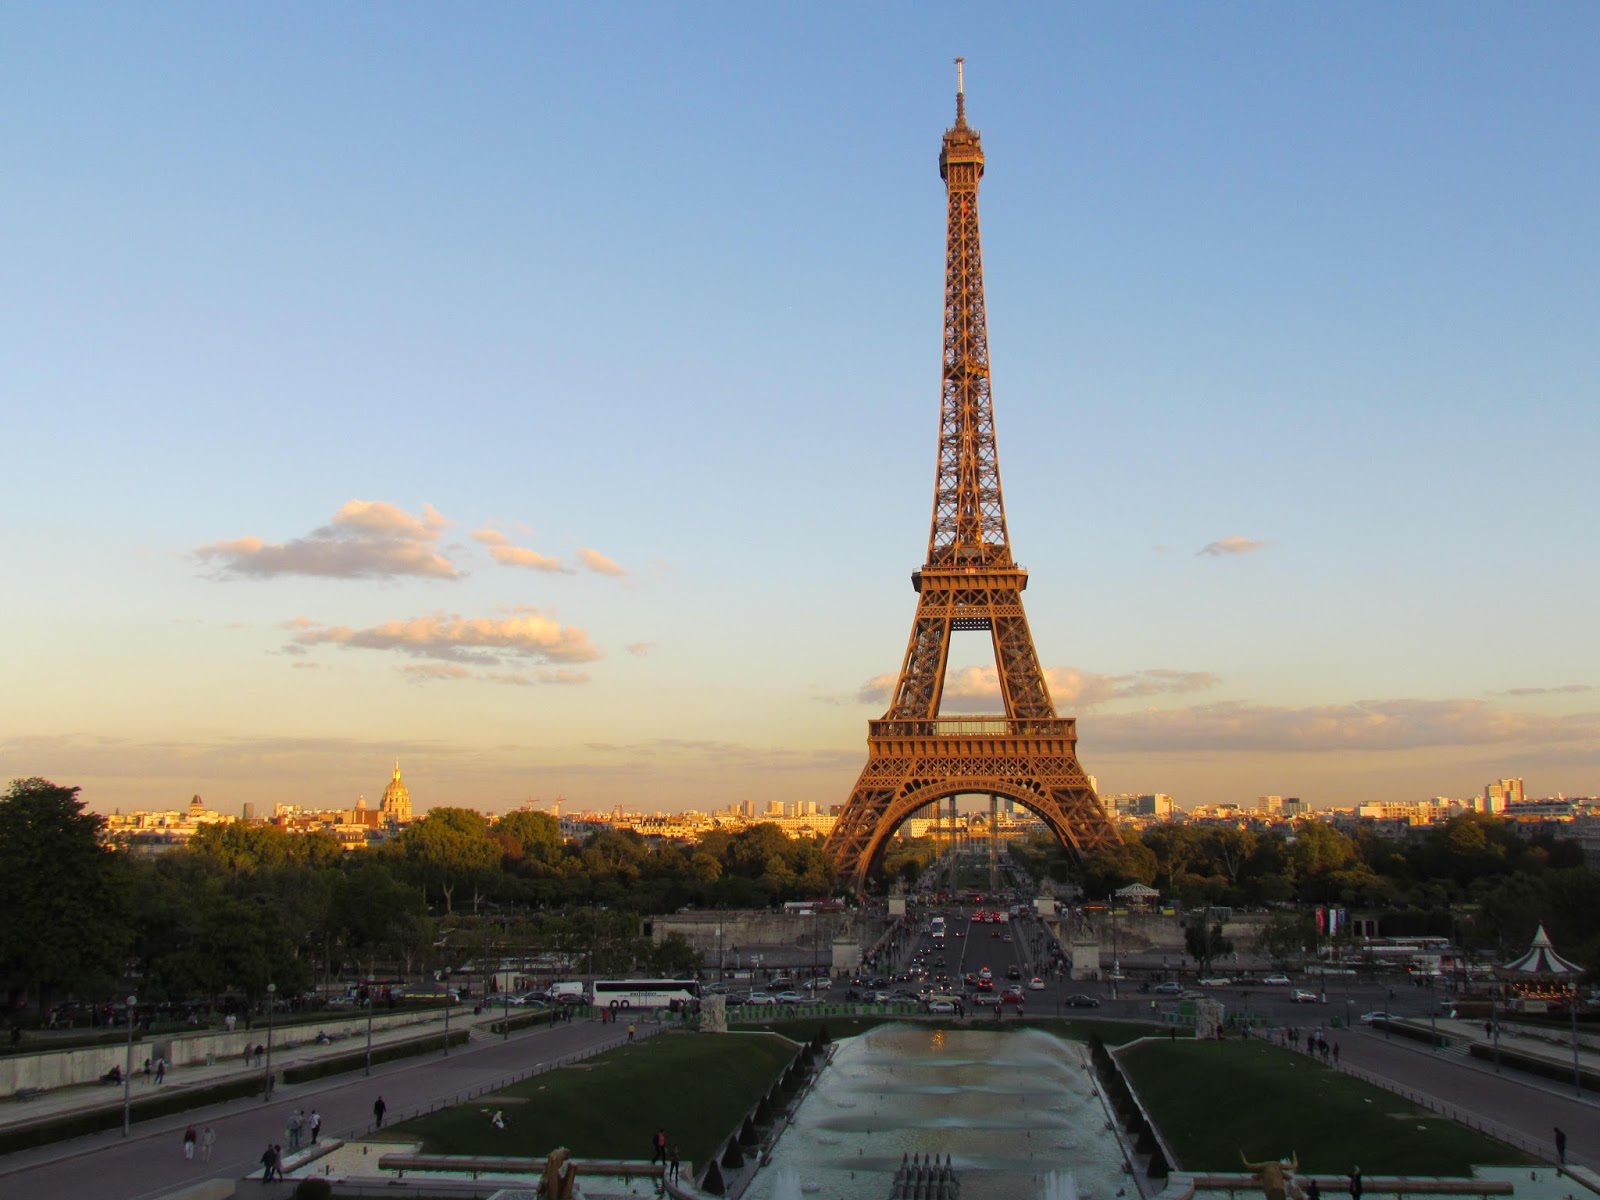 The Eiffel Tower seen from Trocadéro at Sundown